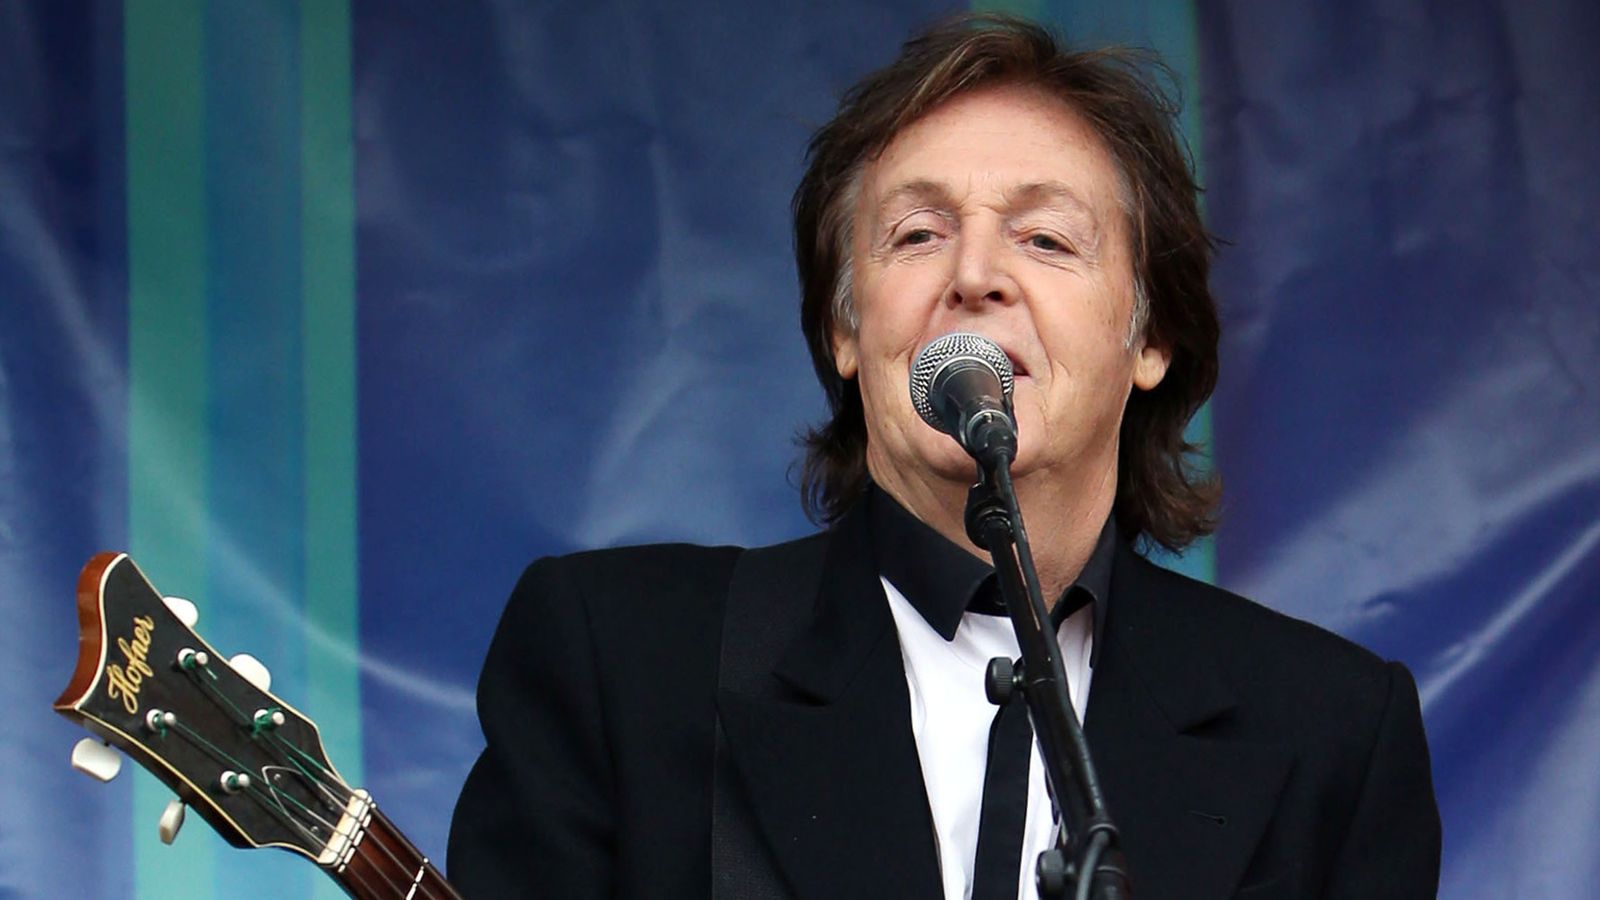 Sir Paul McCartney announces first UK gig since headlining Glastonbury |  Ent & Arts News